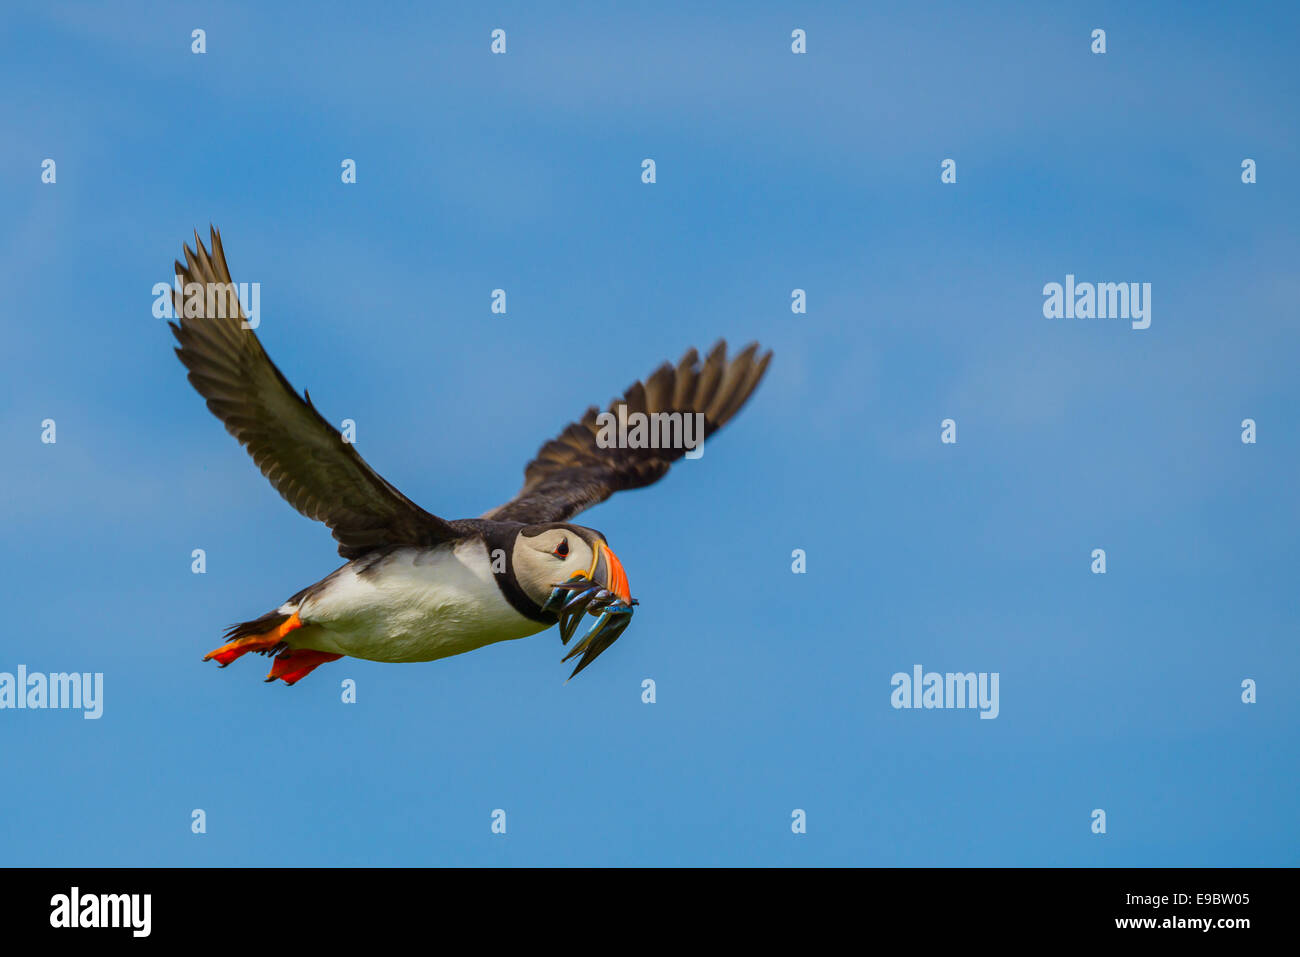 Atlantic Puffin flies overhead having caught sandeels in its beak. European wildlife; a British bird. Stock Photo